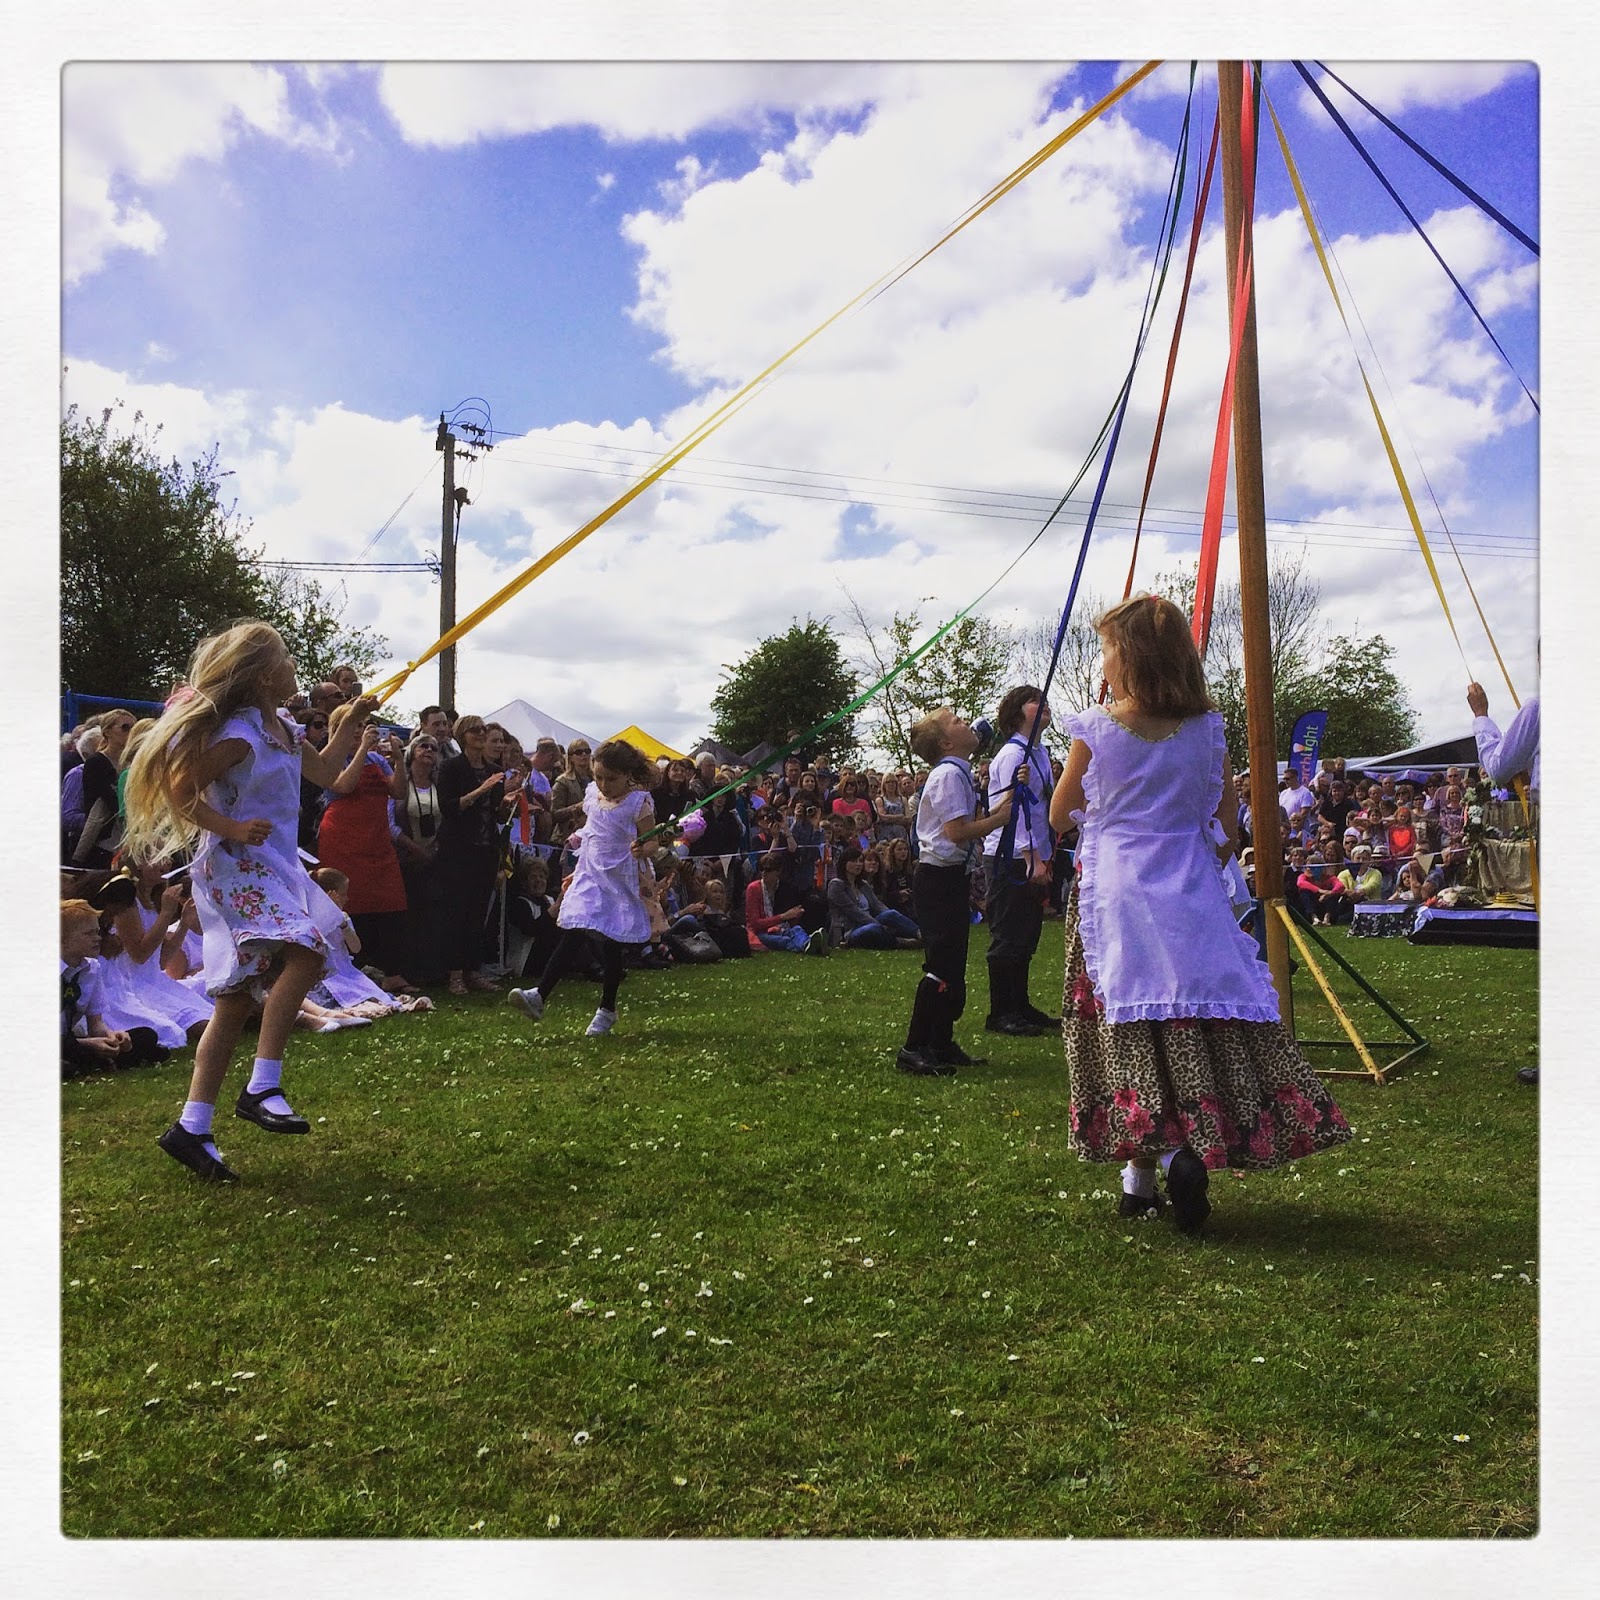 English Maypole dancers